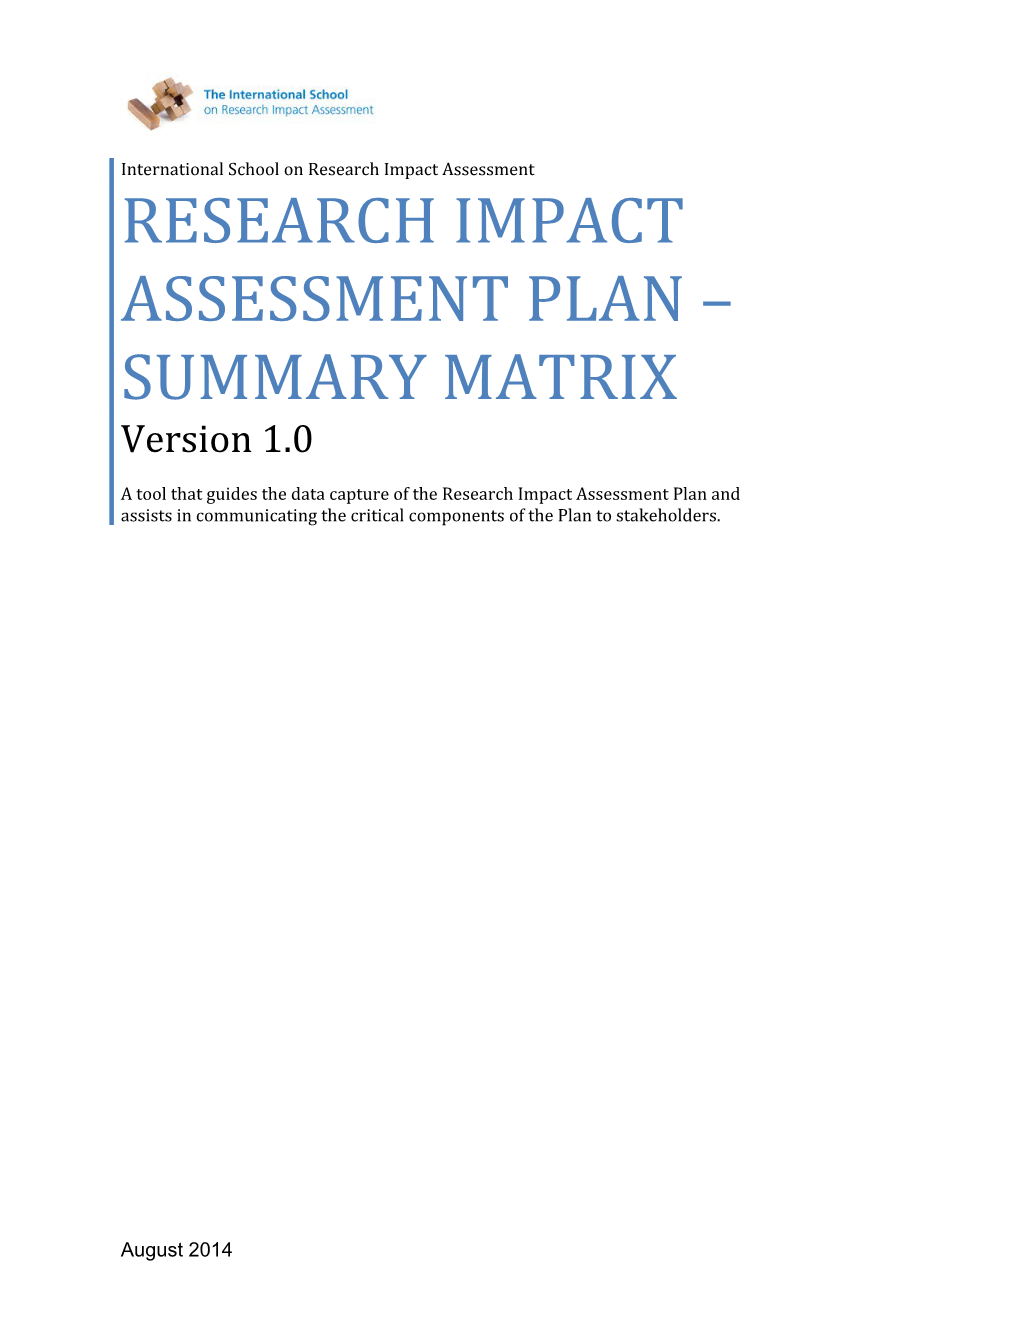 Research Impact Assessment Plan Summary Matrix